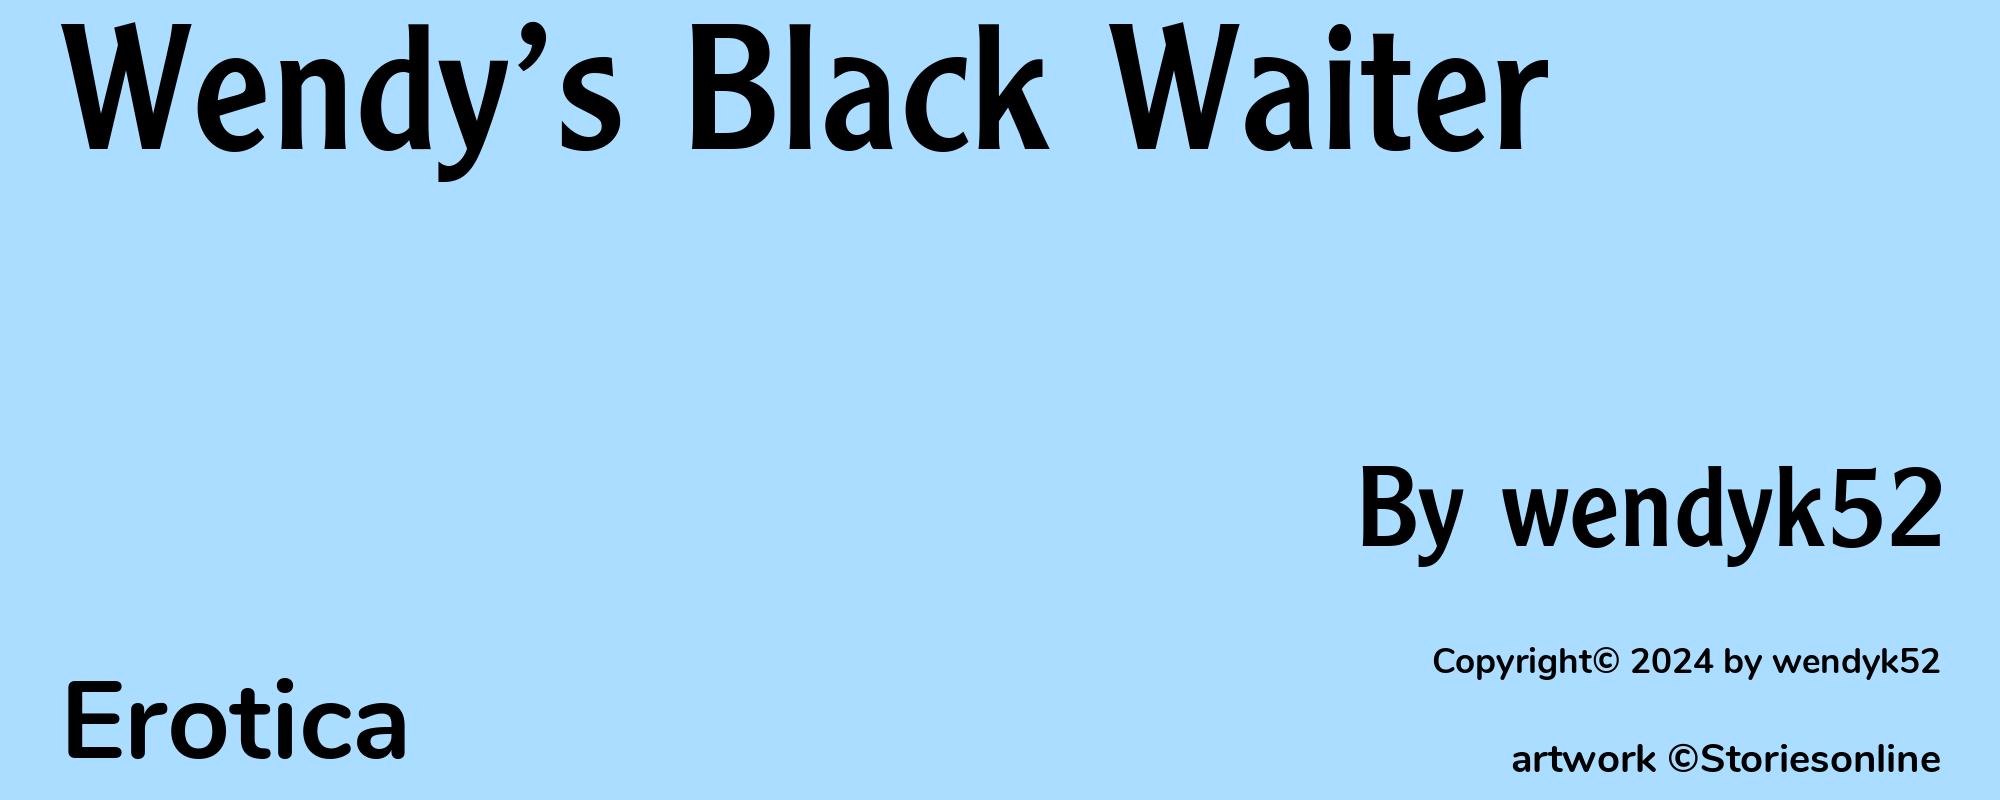 Wendy’s Black Waiter - Cover